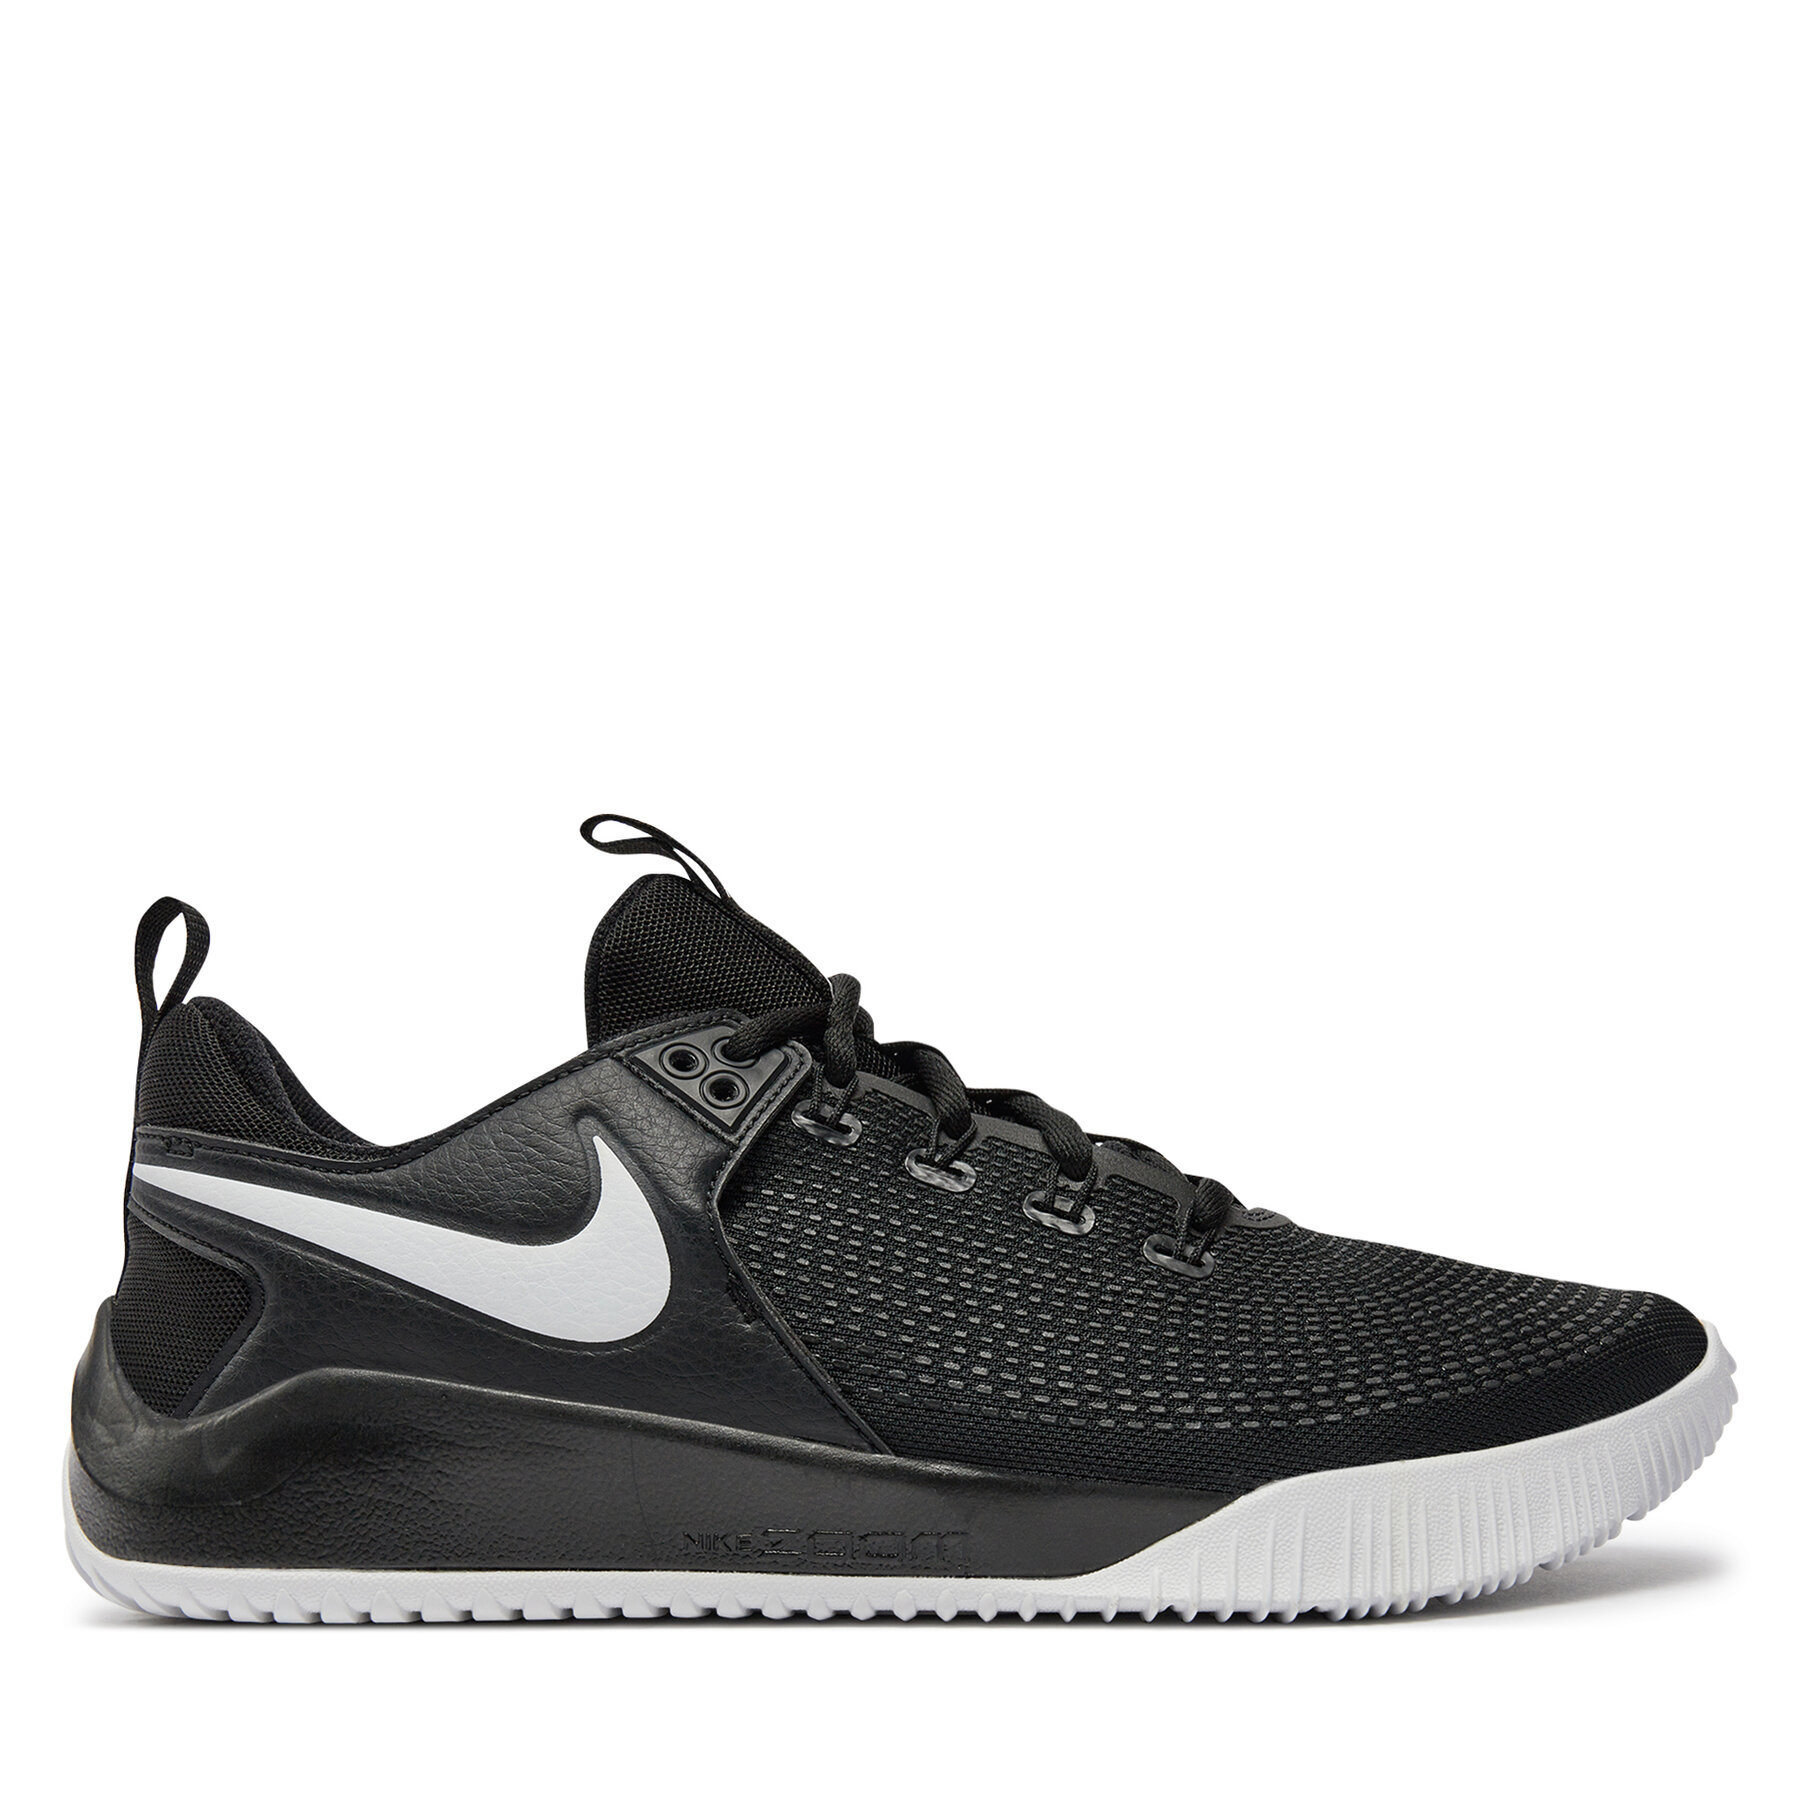 Chaussures Nike Air Zoom Hyperrace 2 AR5281 001 Black/White